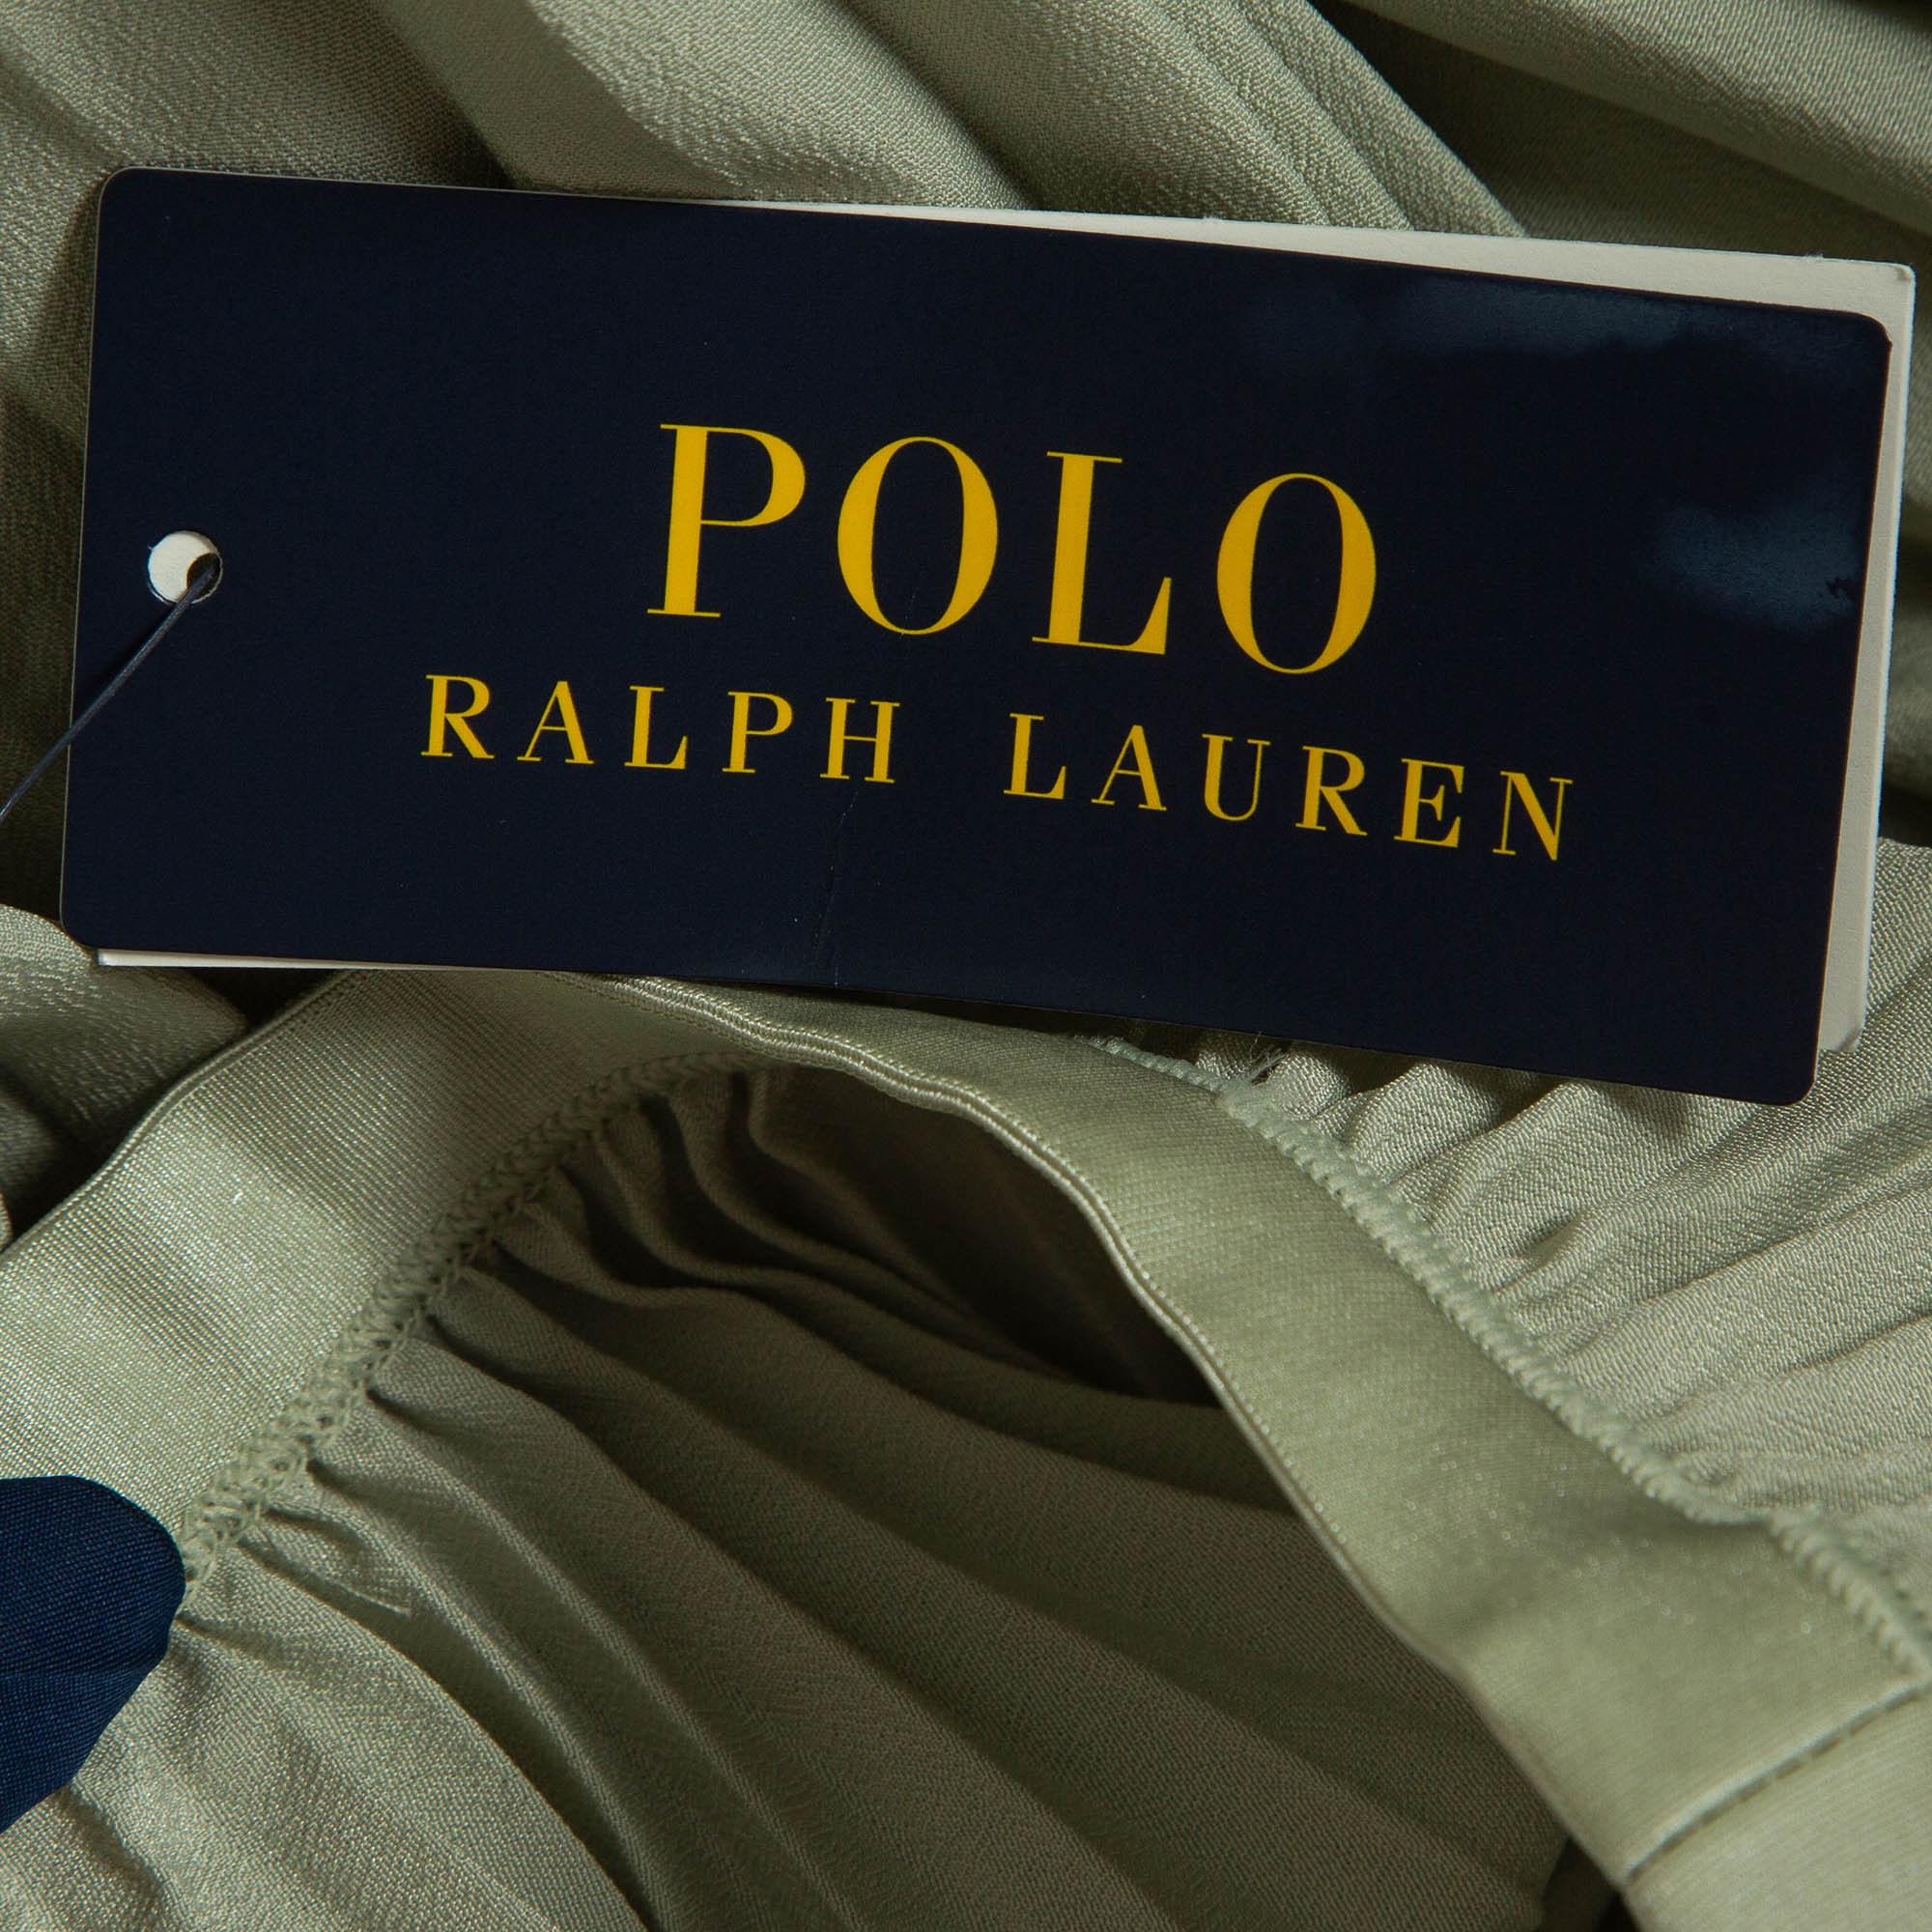 Polo Ralph Lauren Mint Green Pleated Crepe Midi Skirt M